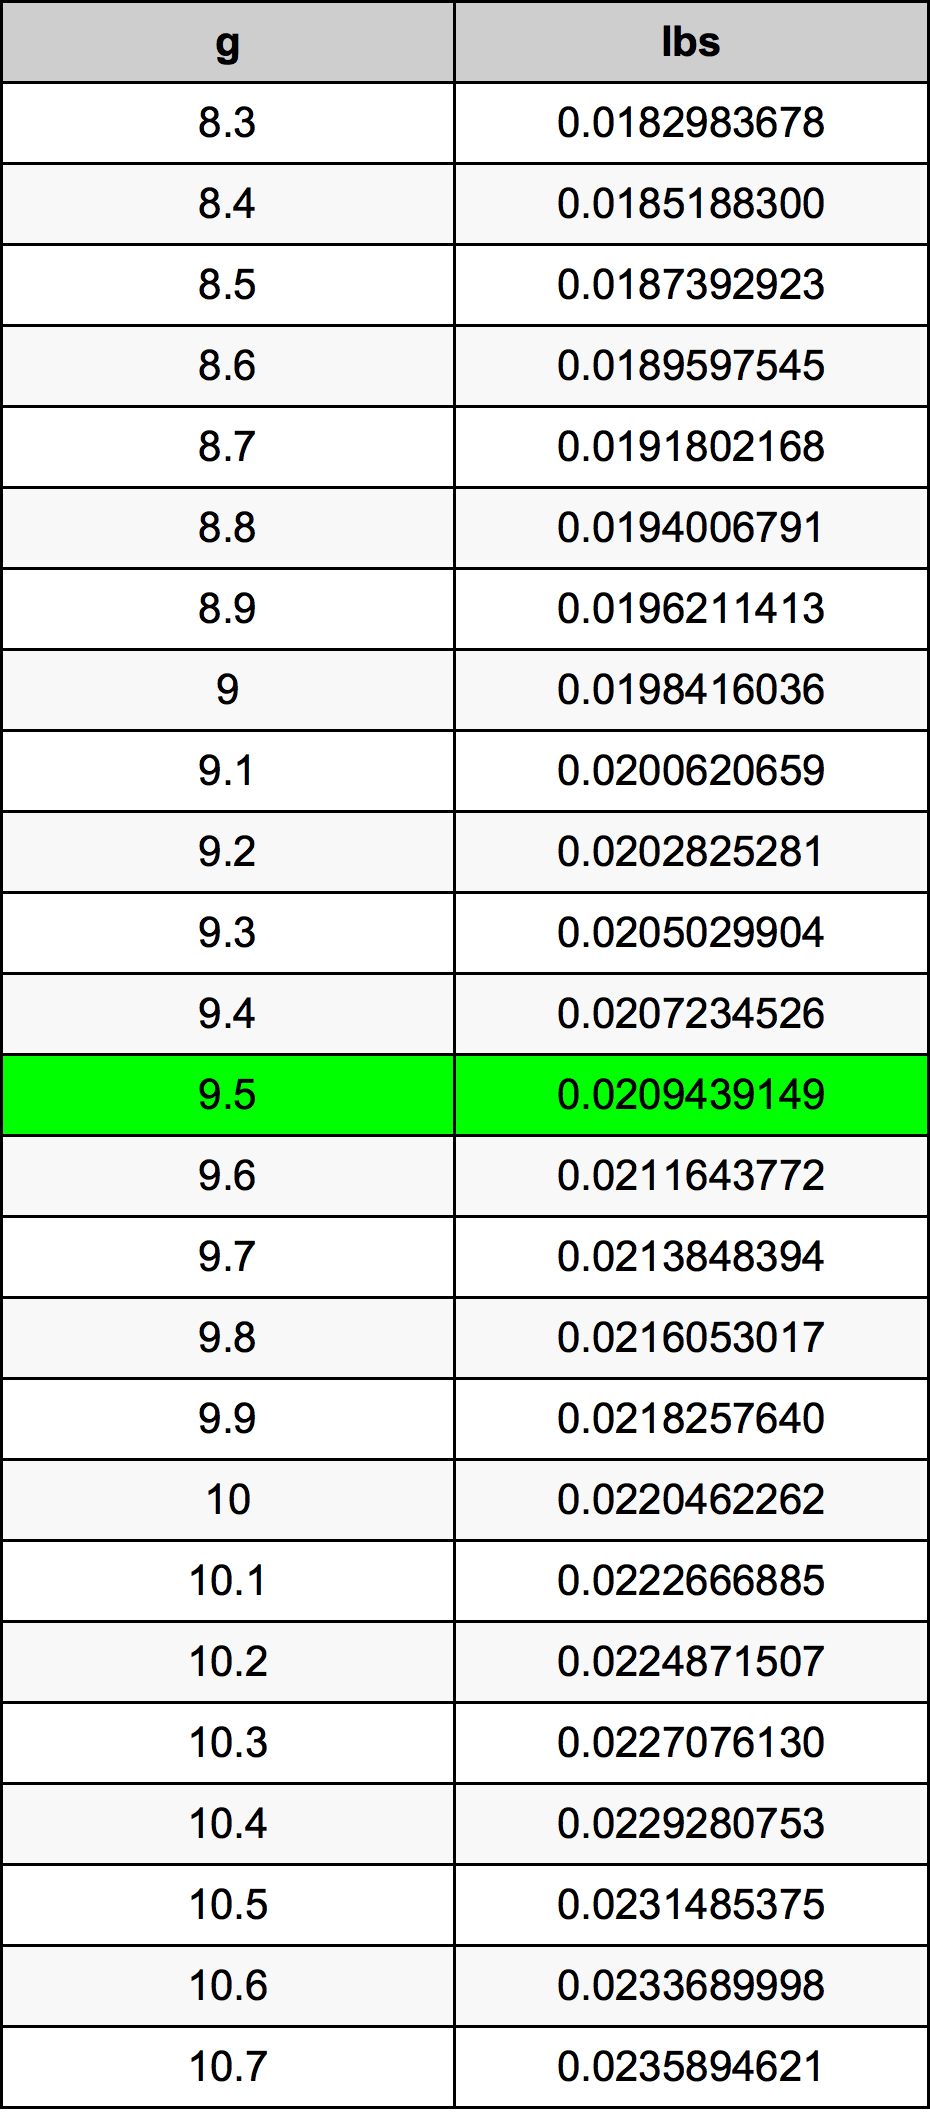 9.5 غرام جدول تحويل